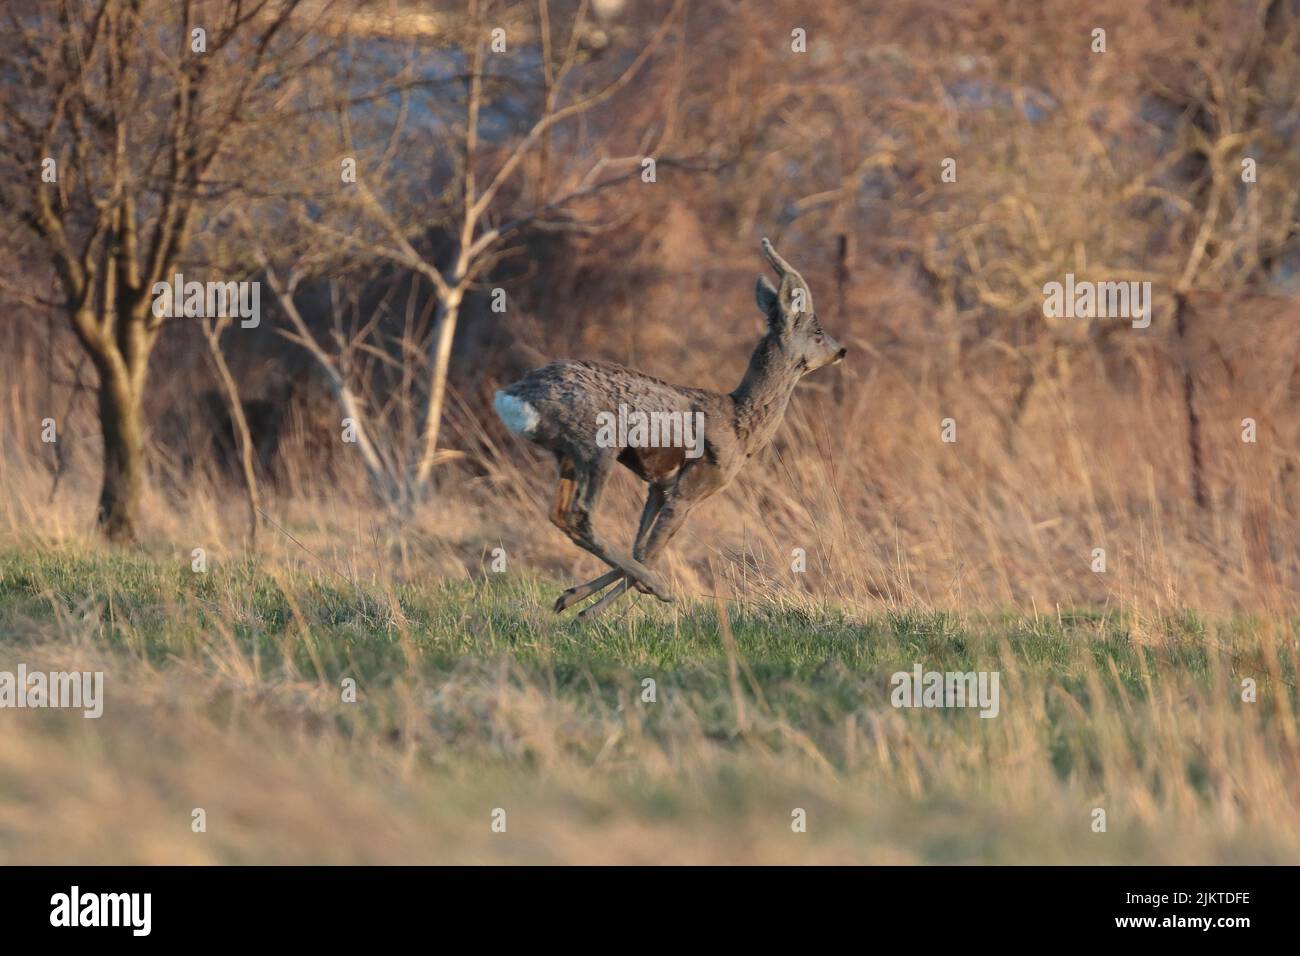 A beautiful deer in wilderness Stock Photo